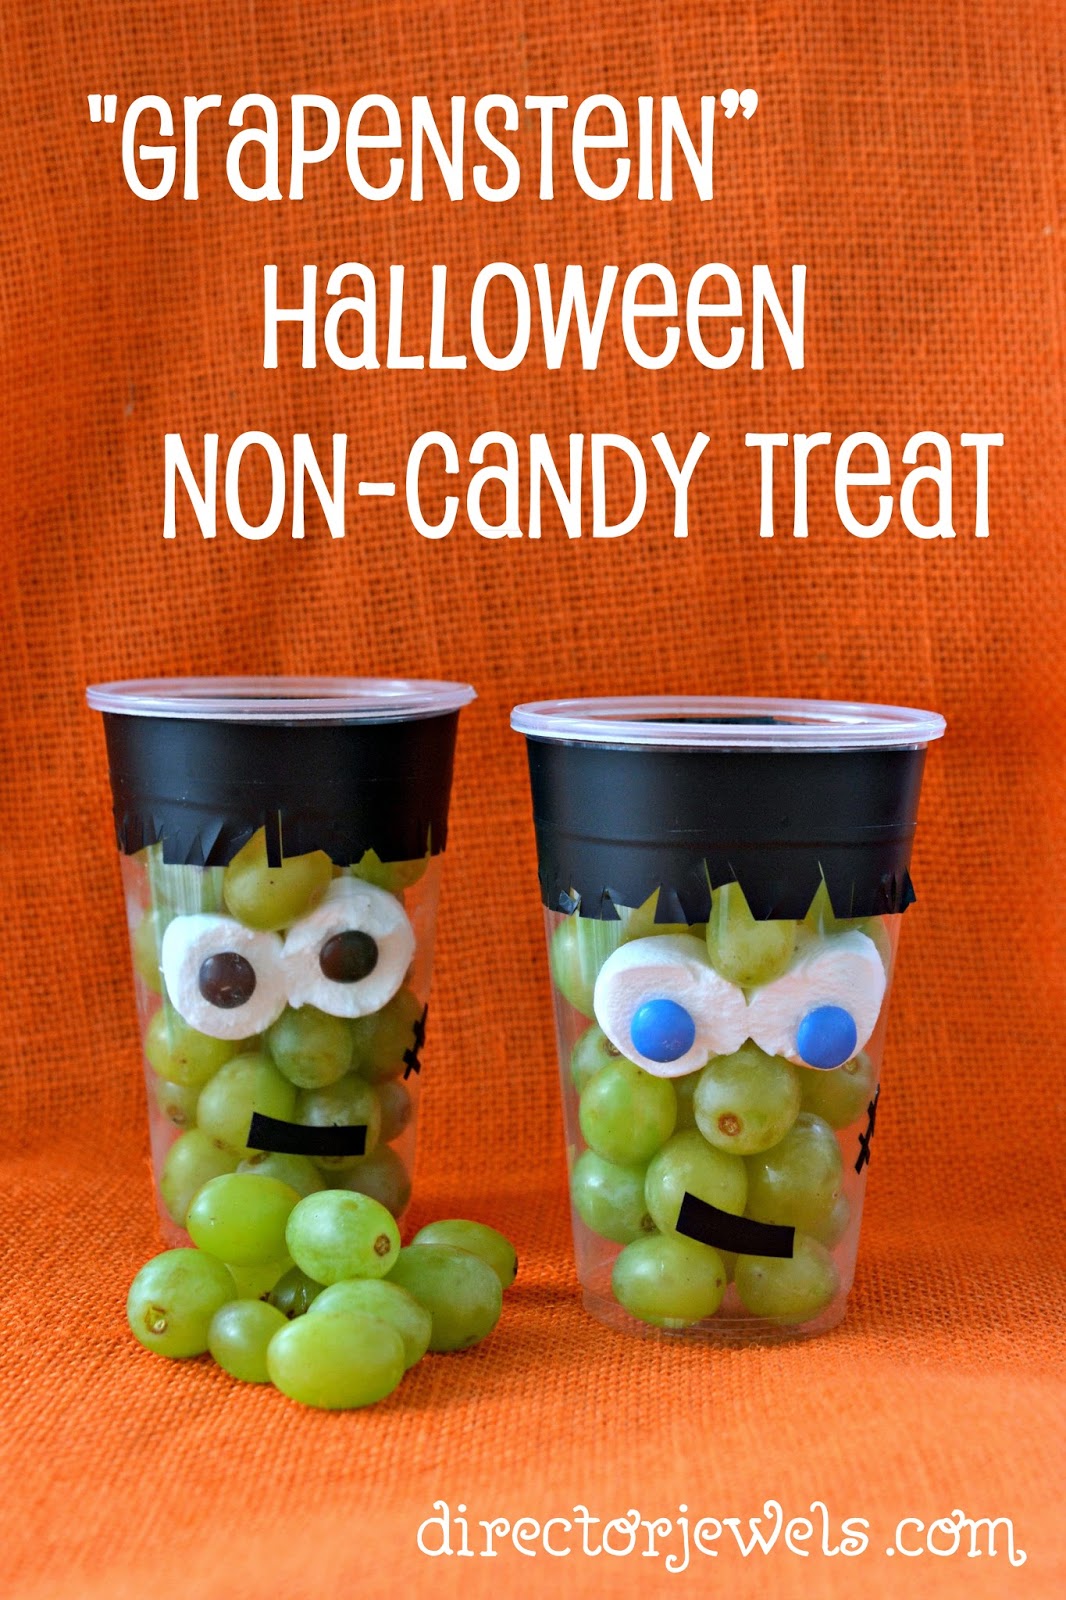 Grape-n-Stein Healthy Non-Candy Halloween Treat Idea | 25+ Halloween Party Food Ideas